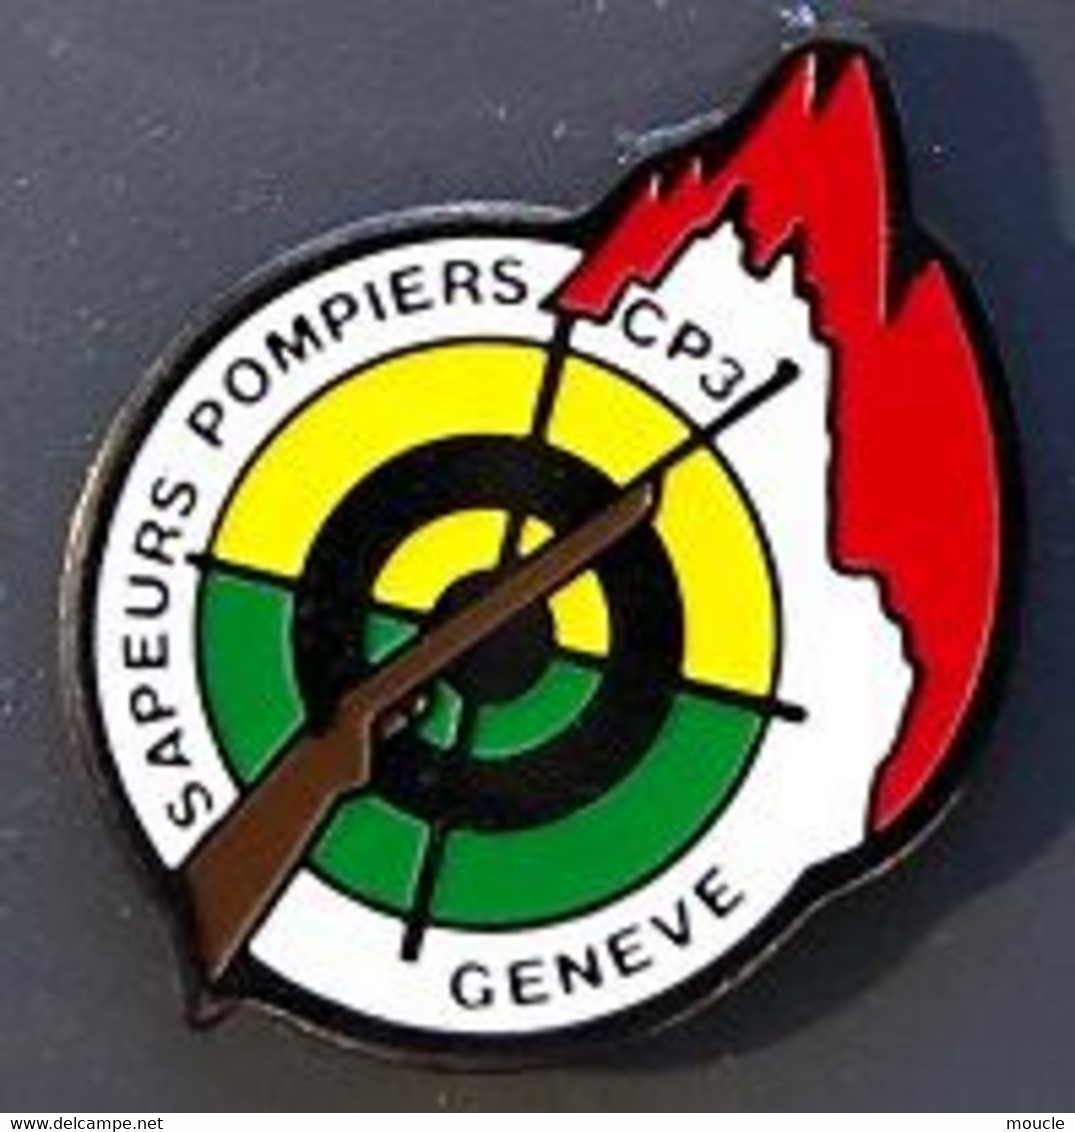 SAPEURS POMPIERS GENEVE CP3 - COMPAGNIE 3 - FUSIL - CIBLE - GENFER FEUERWEHTMANN - FIREFIGHTER GENEVA - POMPIERE -  (25) - Firemen